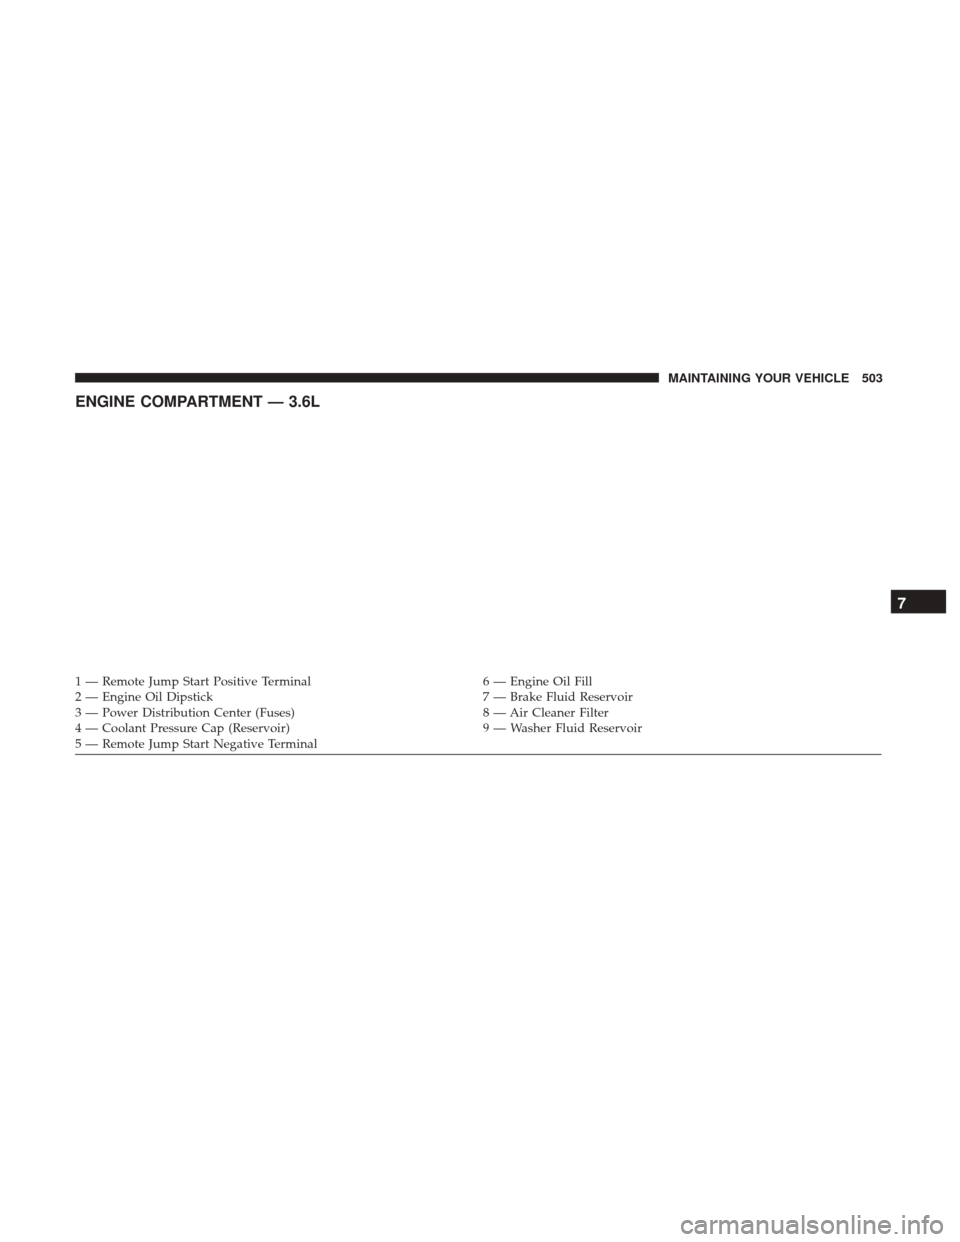 DODGE DURANGO 2017 3.G Owners Manual ENGINE COMPARTMENT — 3.6L
1 — Remote Jump Start Positive Terminal6 — Engine Oil Fill
2 — Engine Oil Dipstick 7 — Brake Fluid Reservoir
3 — Power Distribution Center (Fuses) 8 — Air Clean